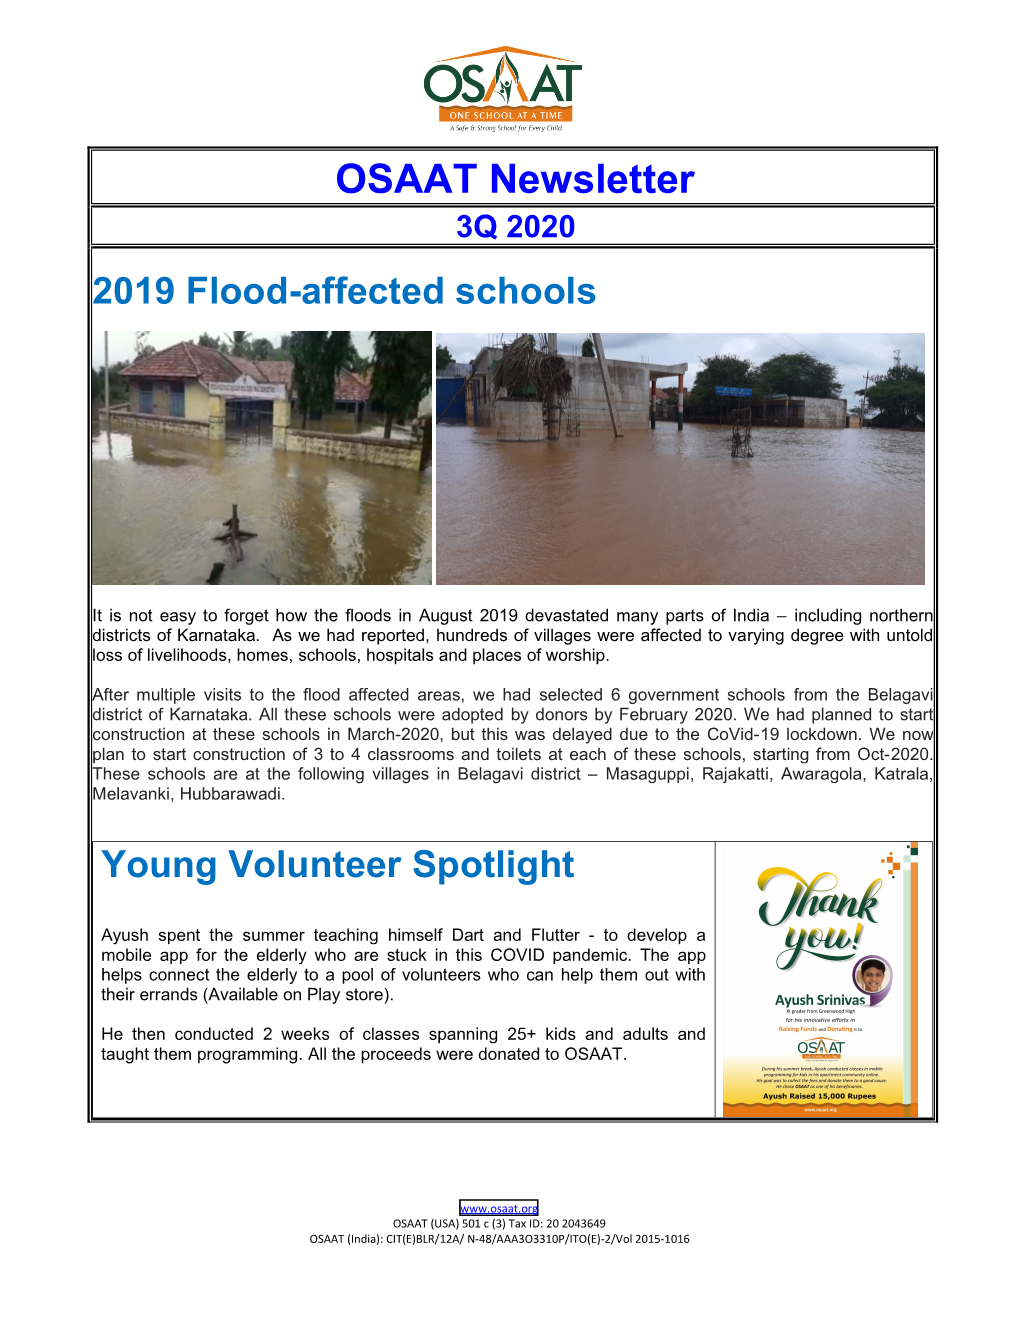 OSAAT Newsletter 3Q 2020